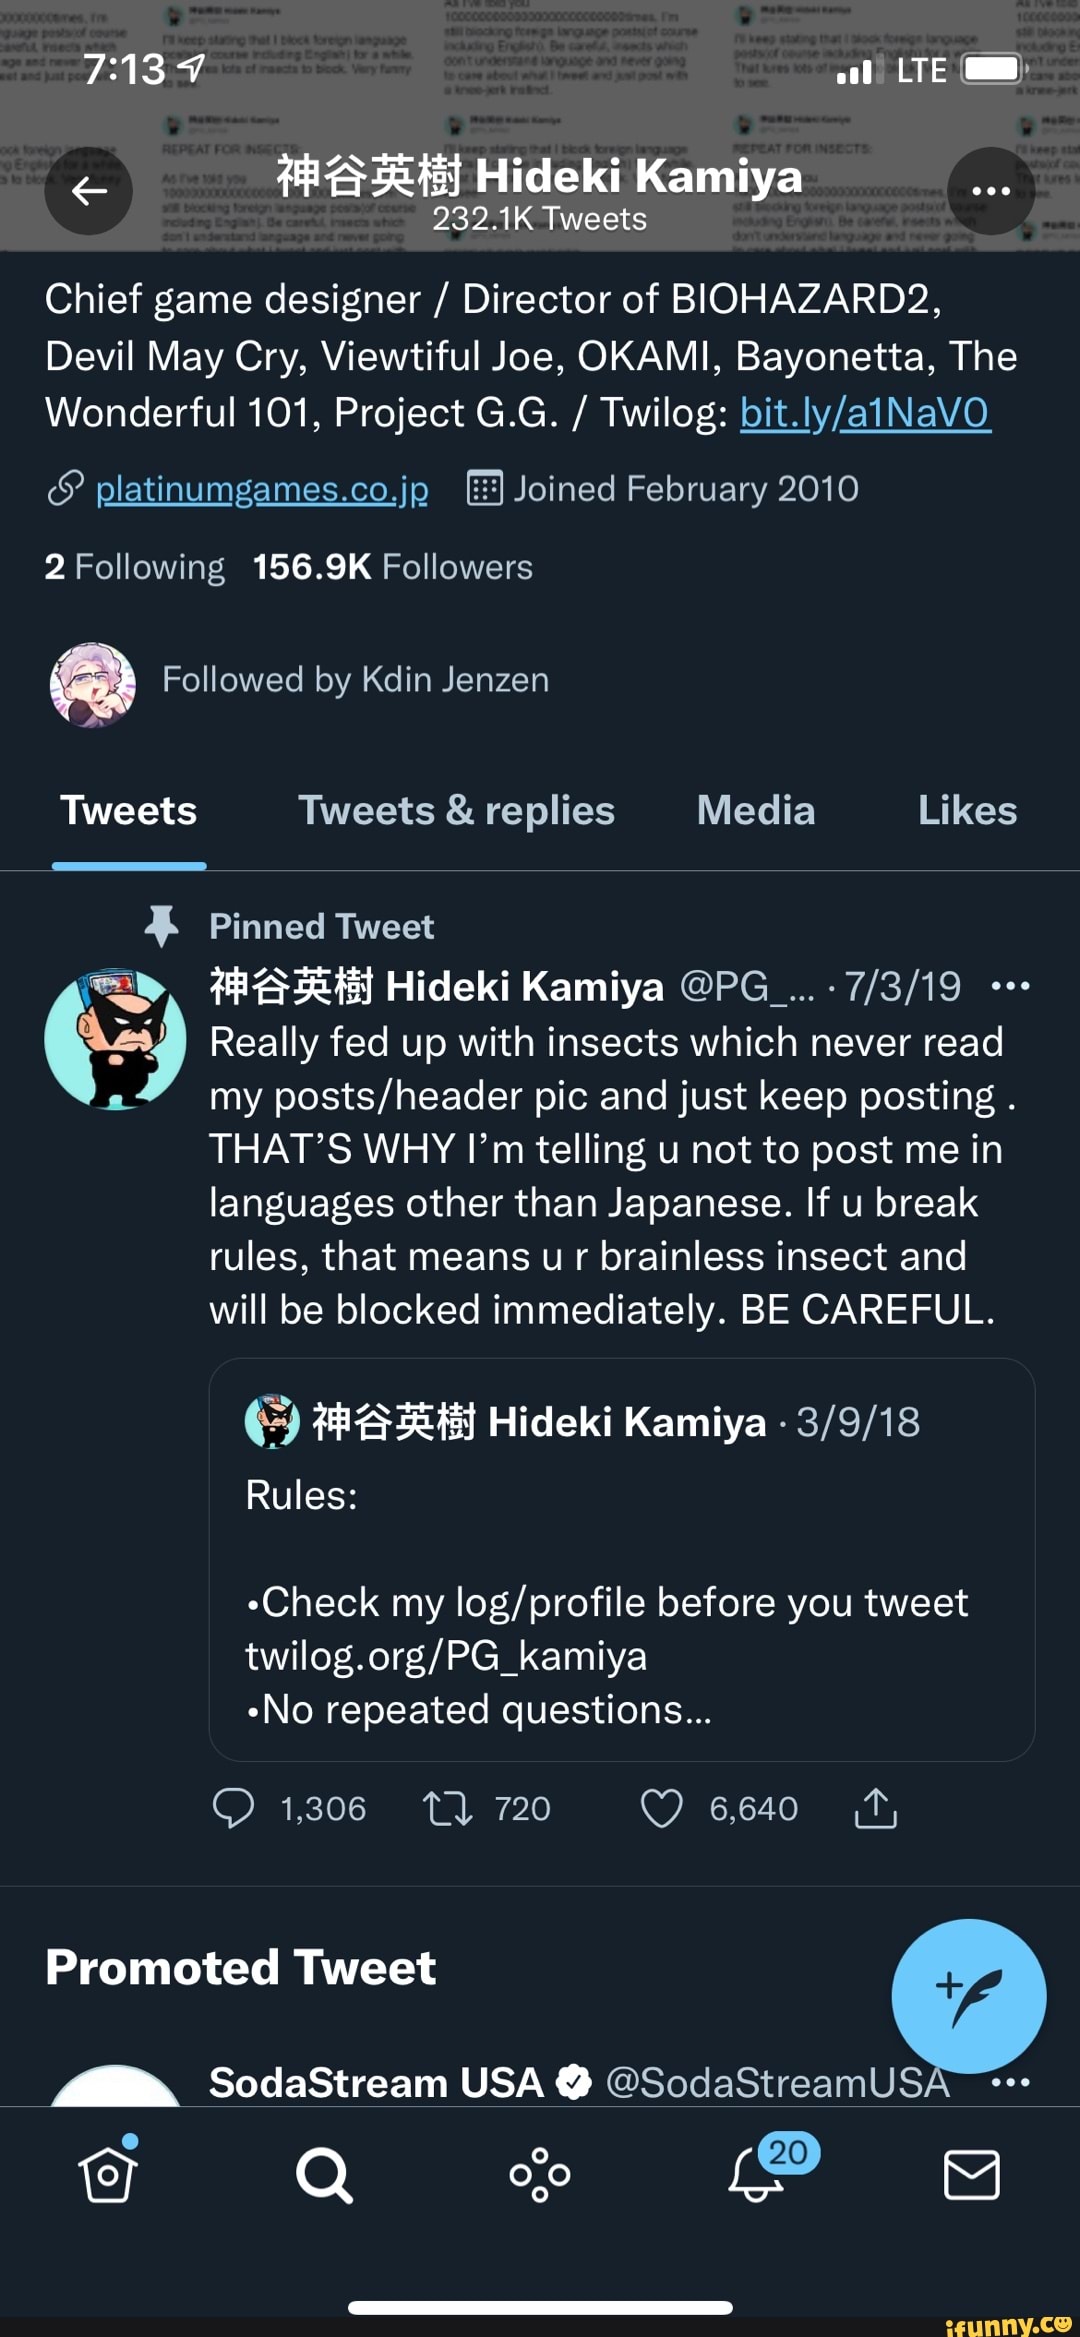 I asked Hideki Kamiya all the questions he blocks you for on Twitter